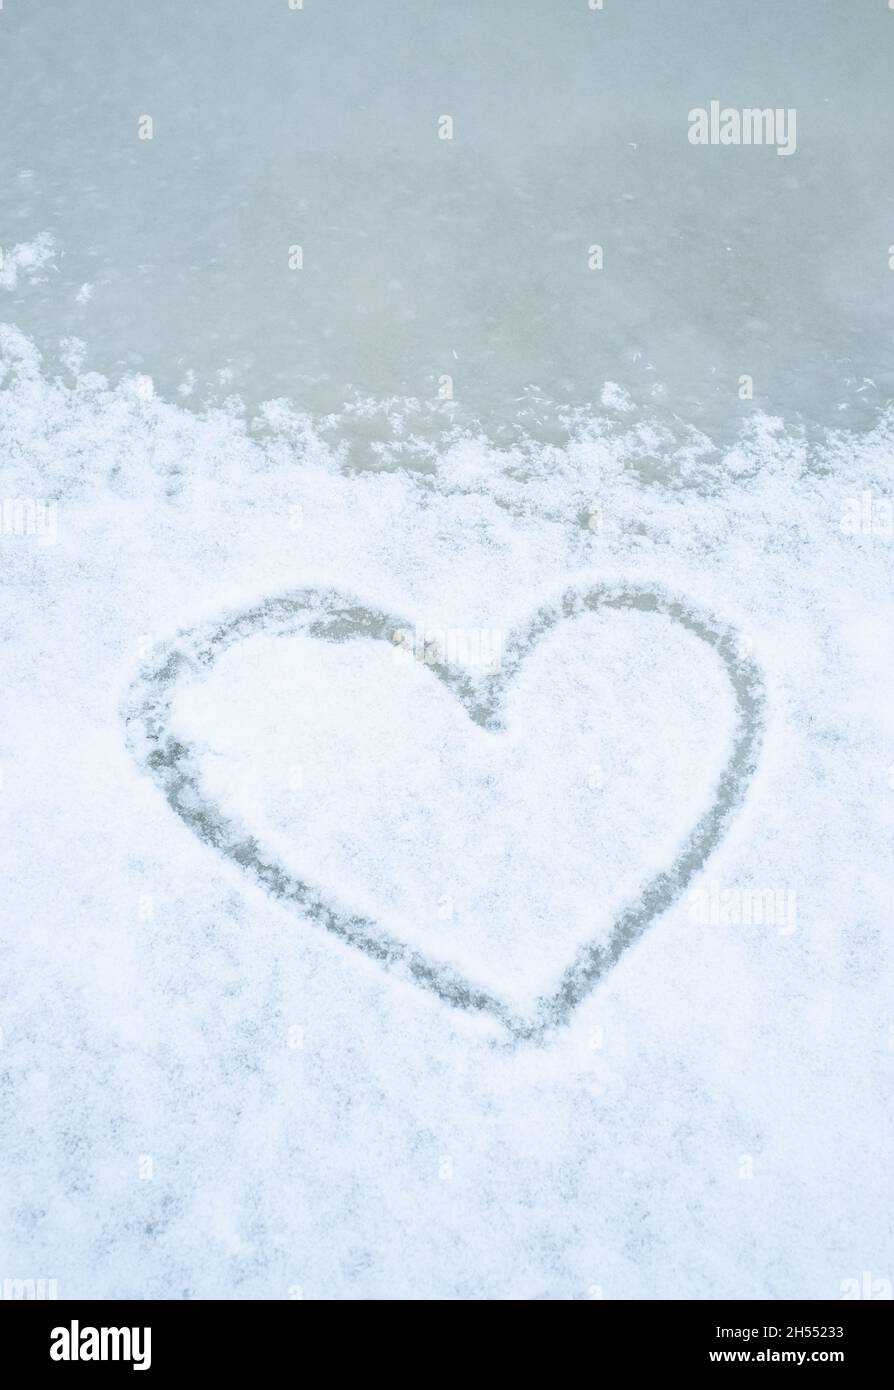 Love winter season. Heart shape drawn into snow on ice. Stock Photo